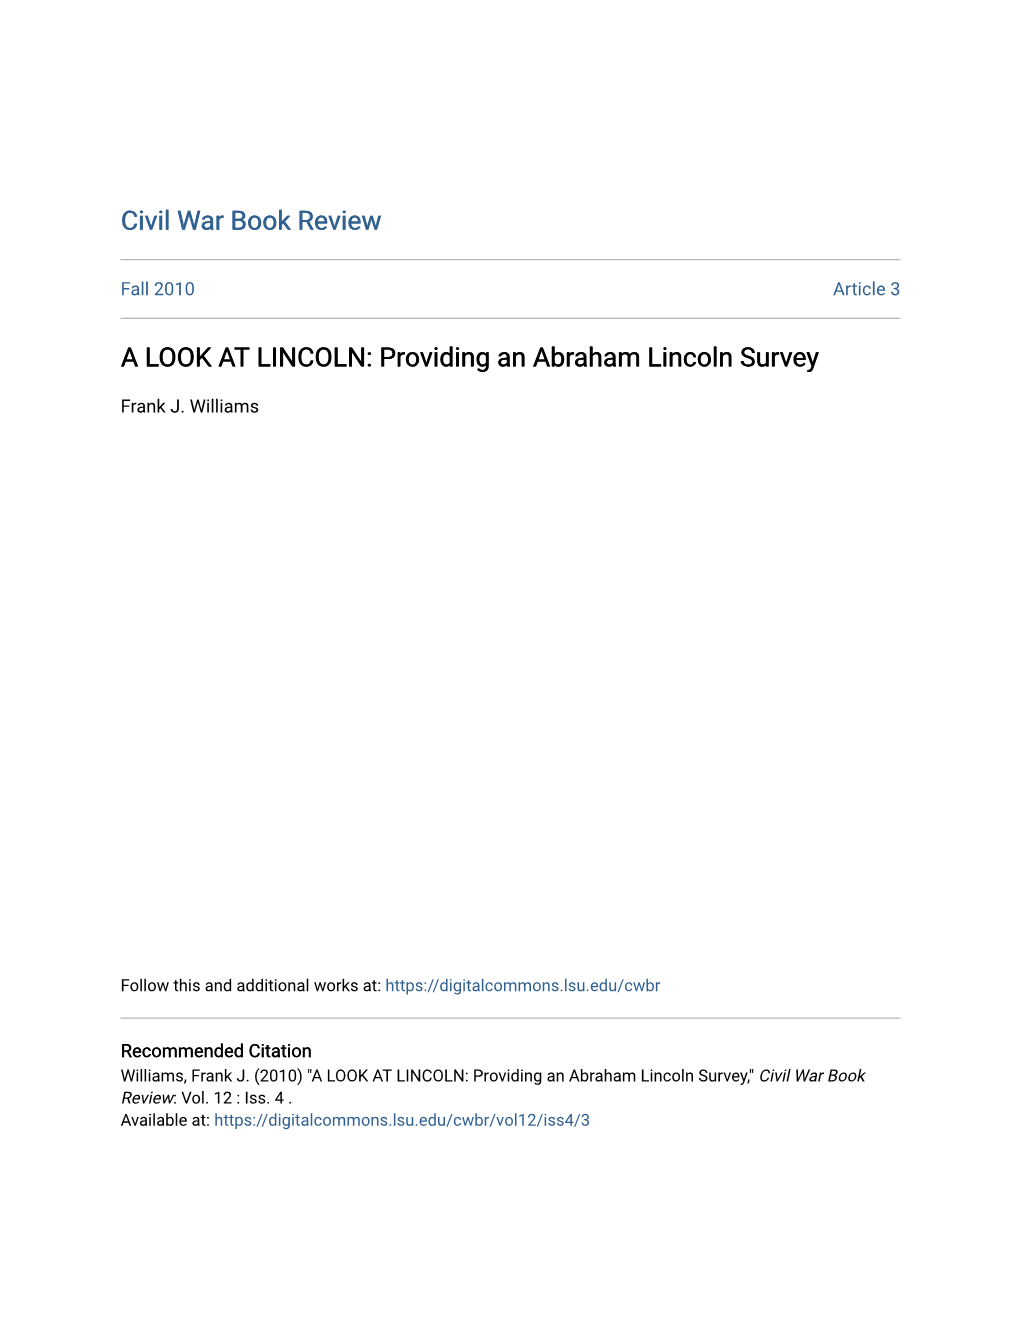 Providing an Abraham Lincoln Survey